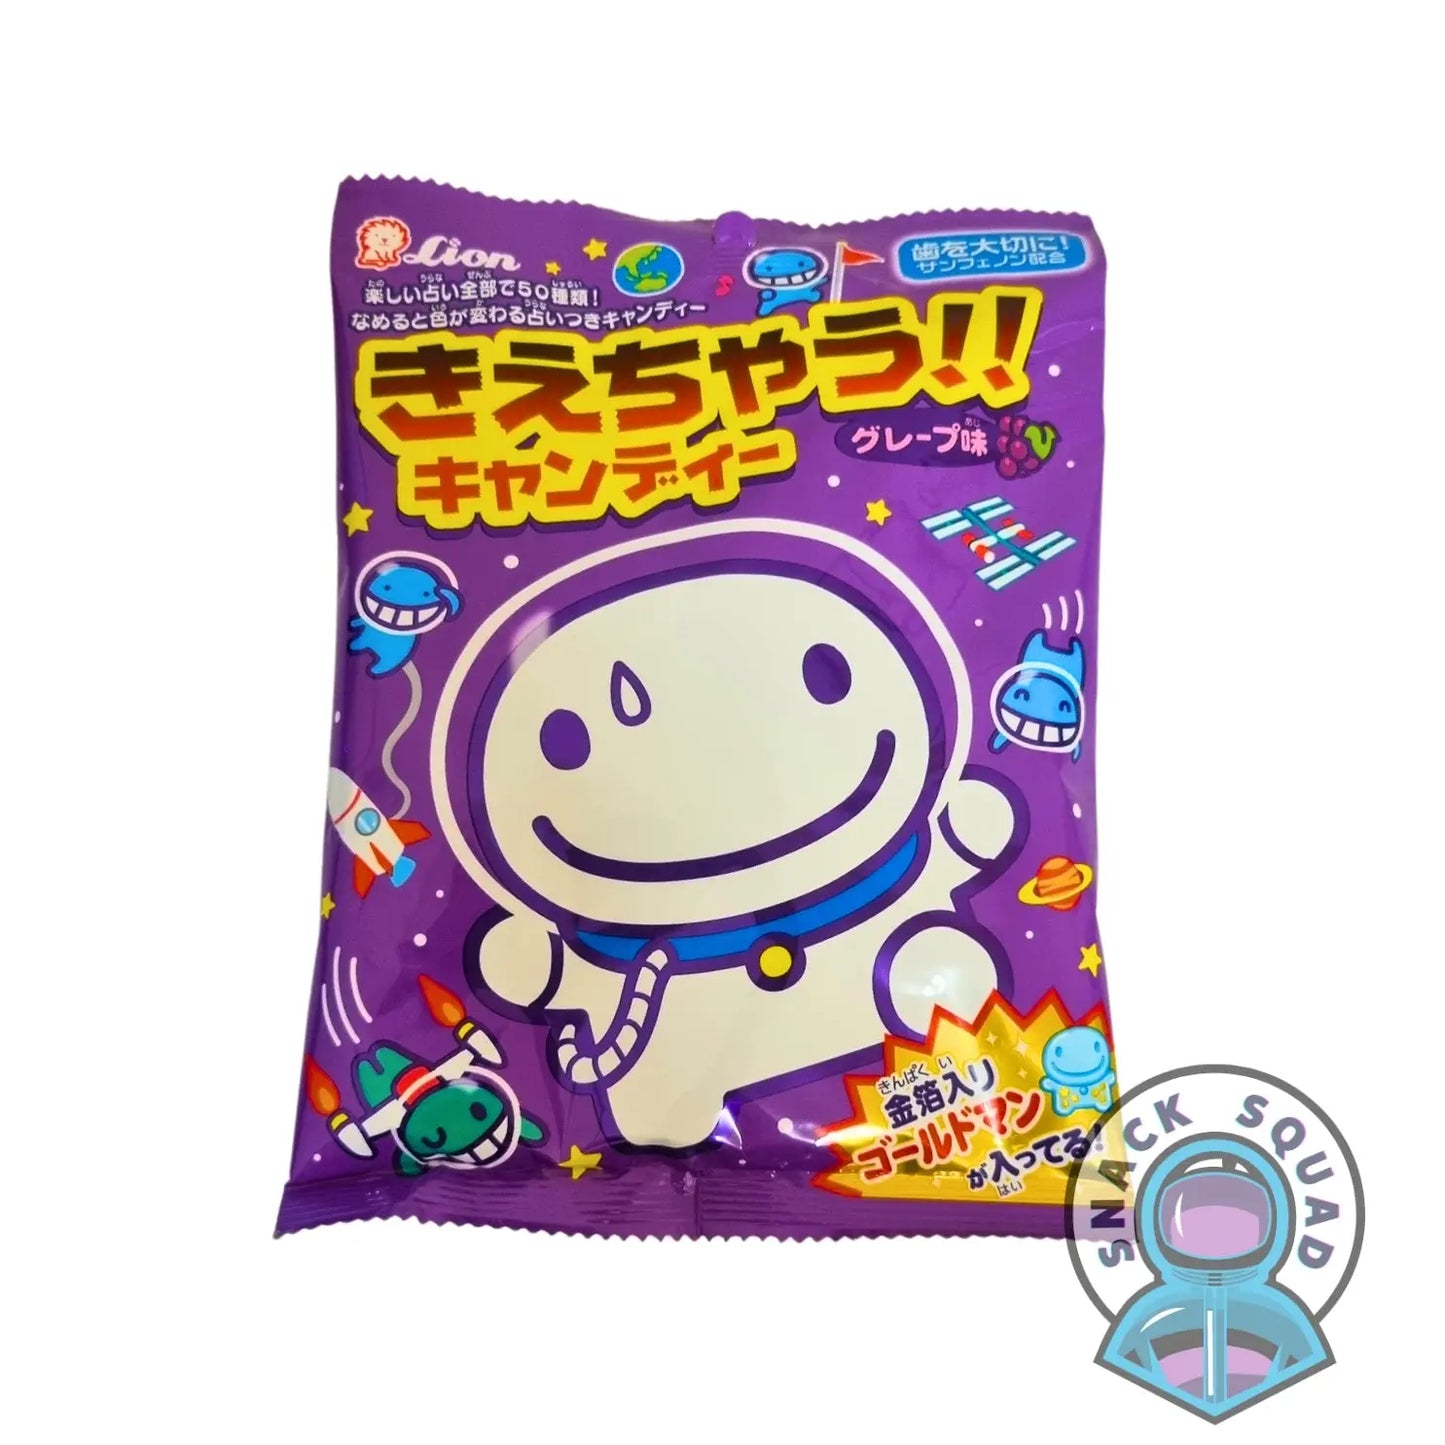 Lion Kiechau Candy 89g (Japan) Snack Squad